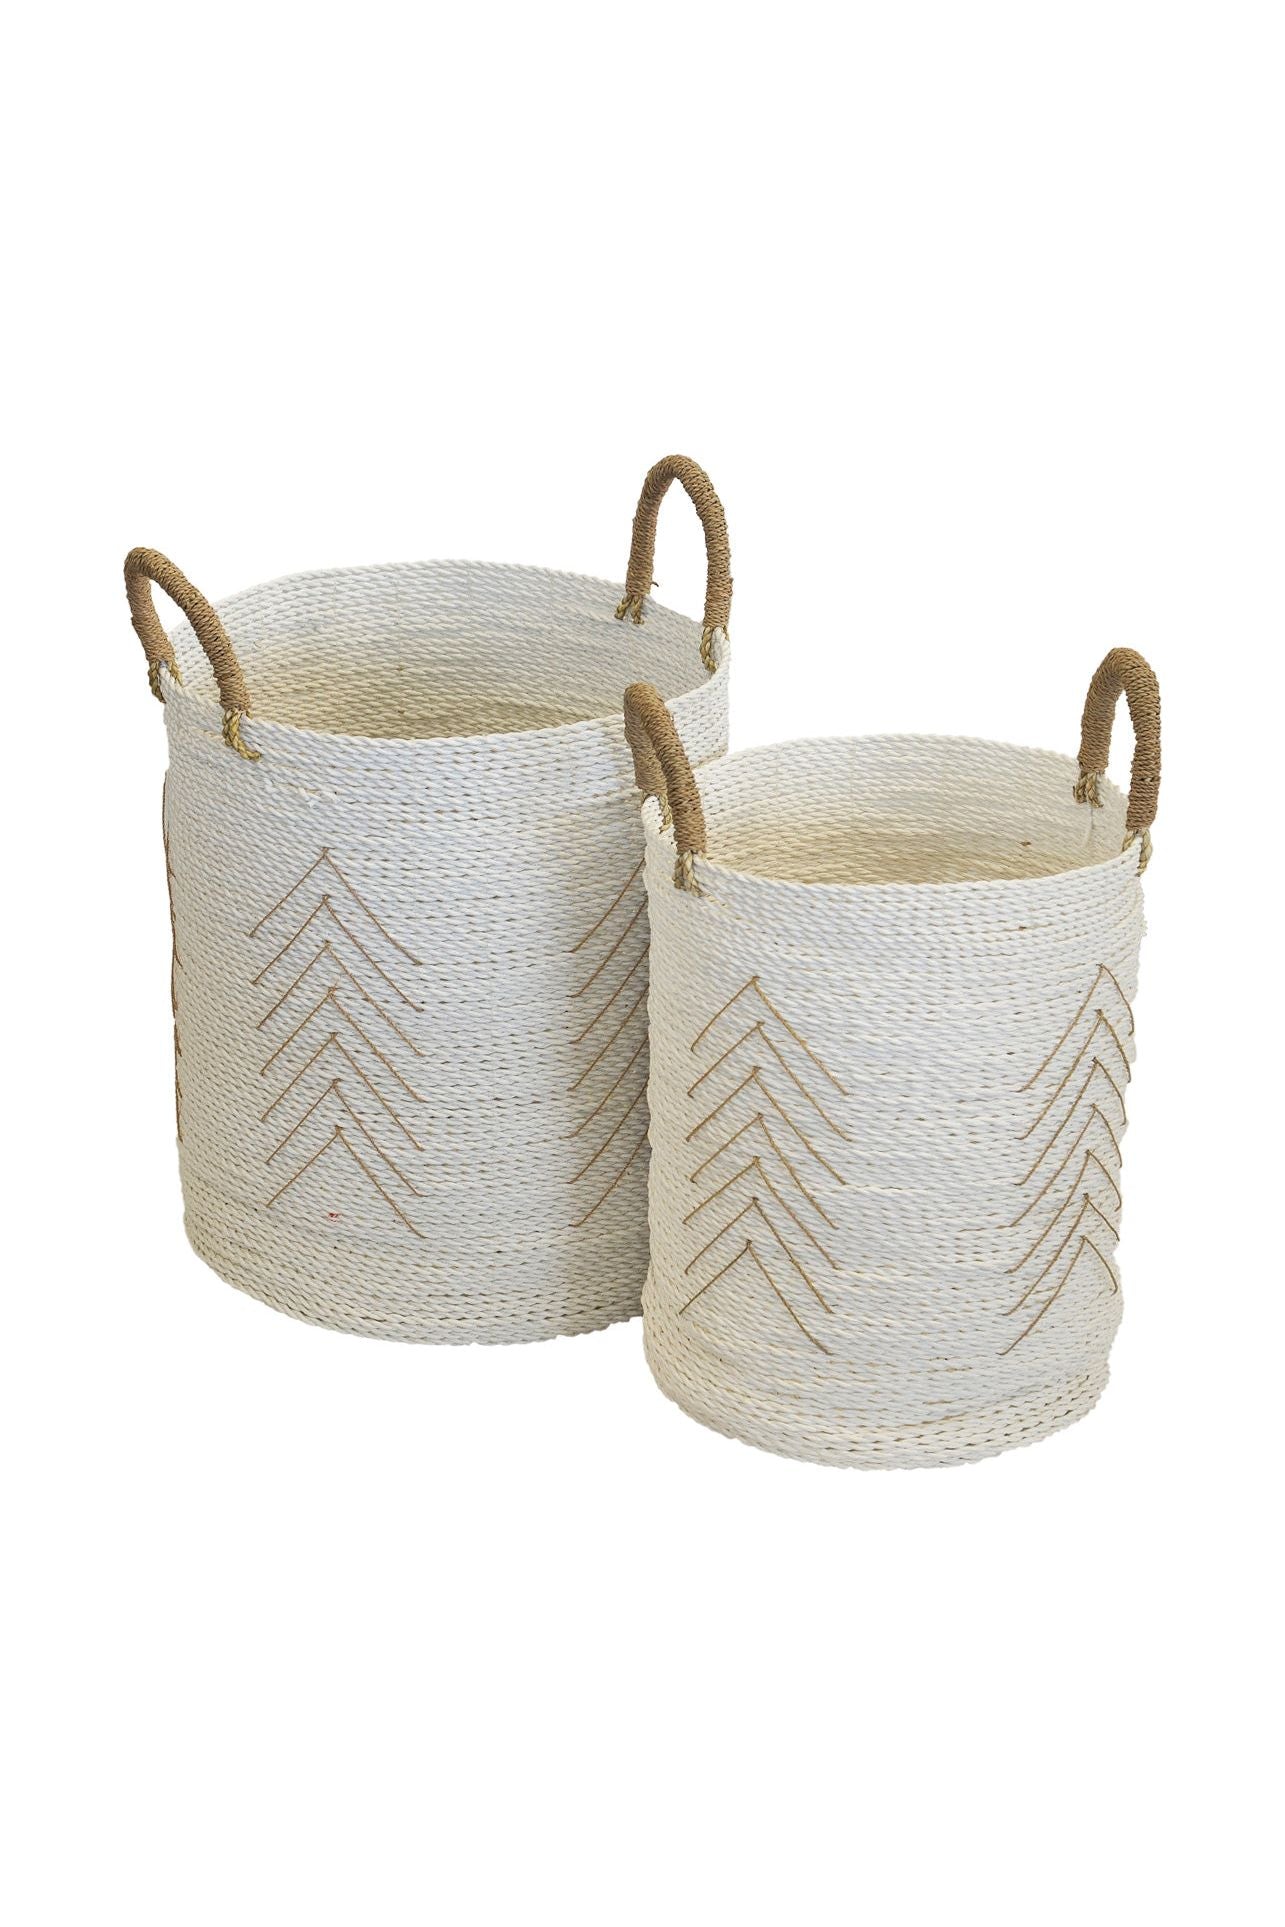 Basket round white with natural chevron